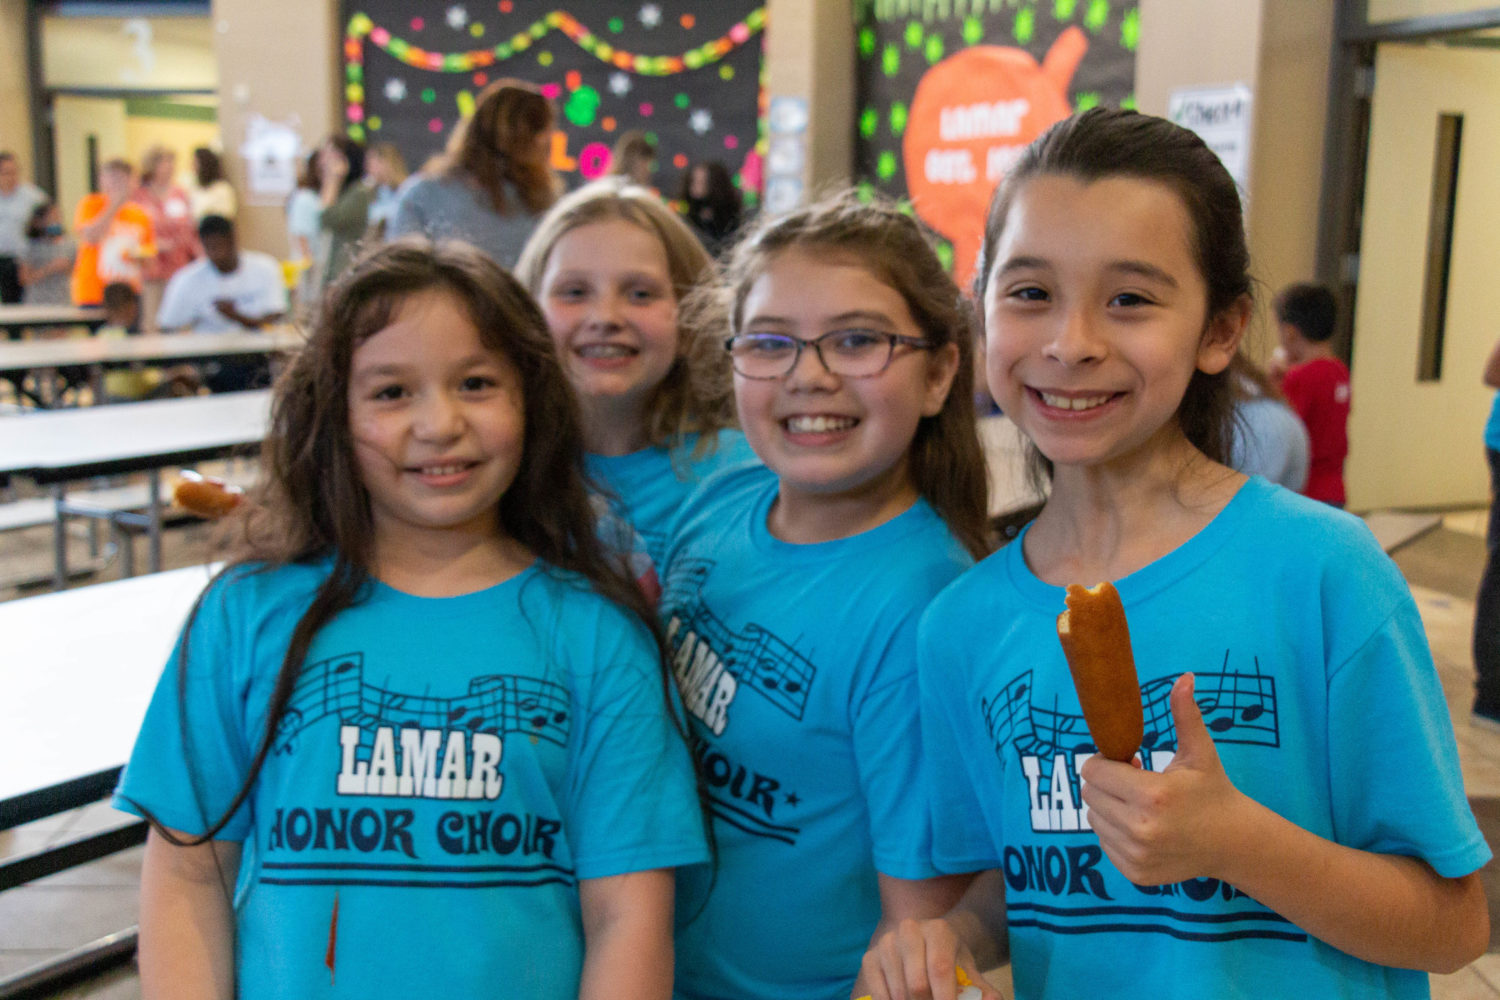 Students at Lamar enjoy the fun festivities at their school's 50 Year Celebration!